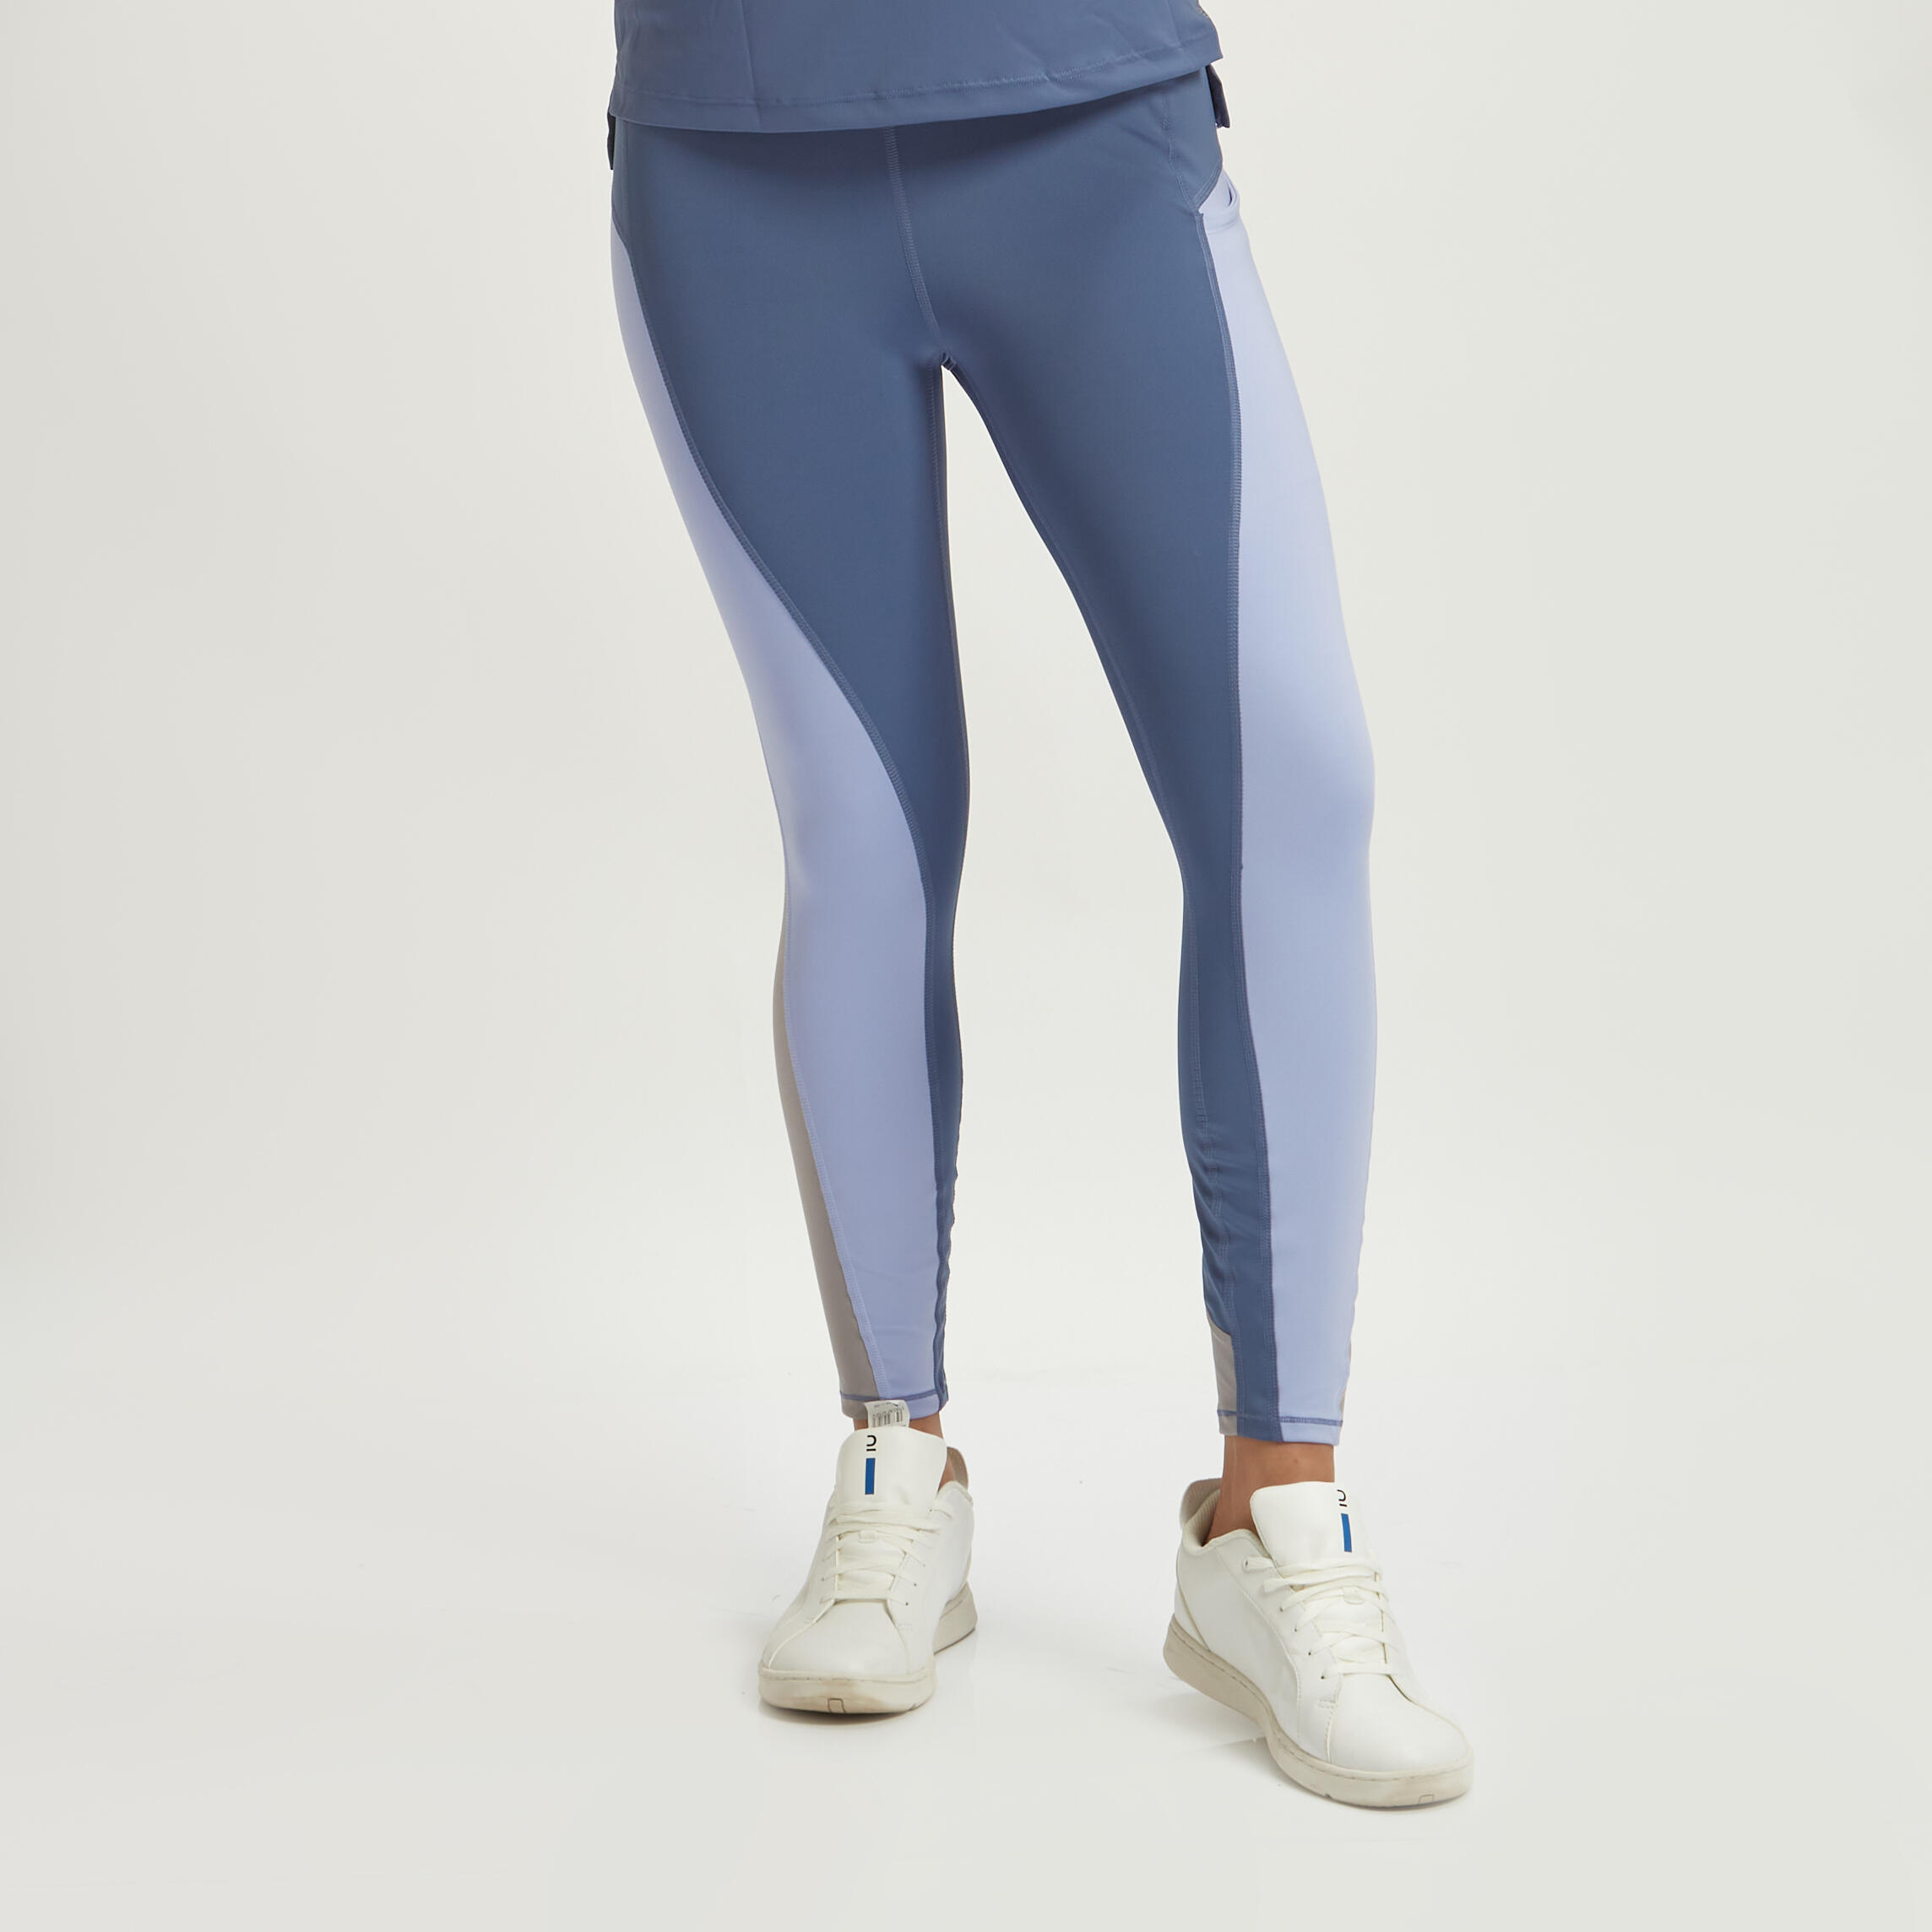 Nike Womens Size M Leggings Floral / Grey